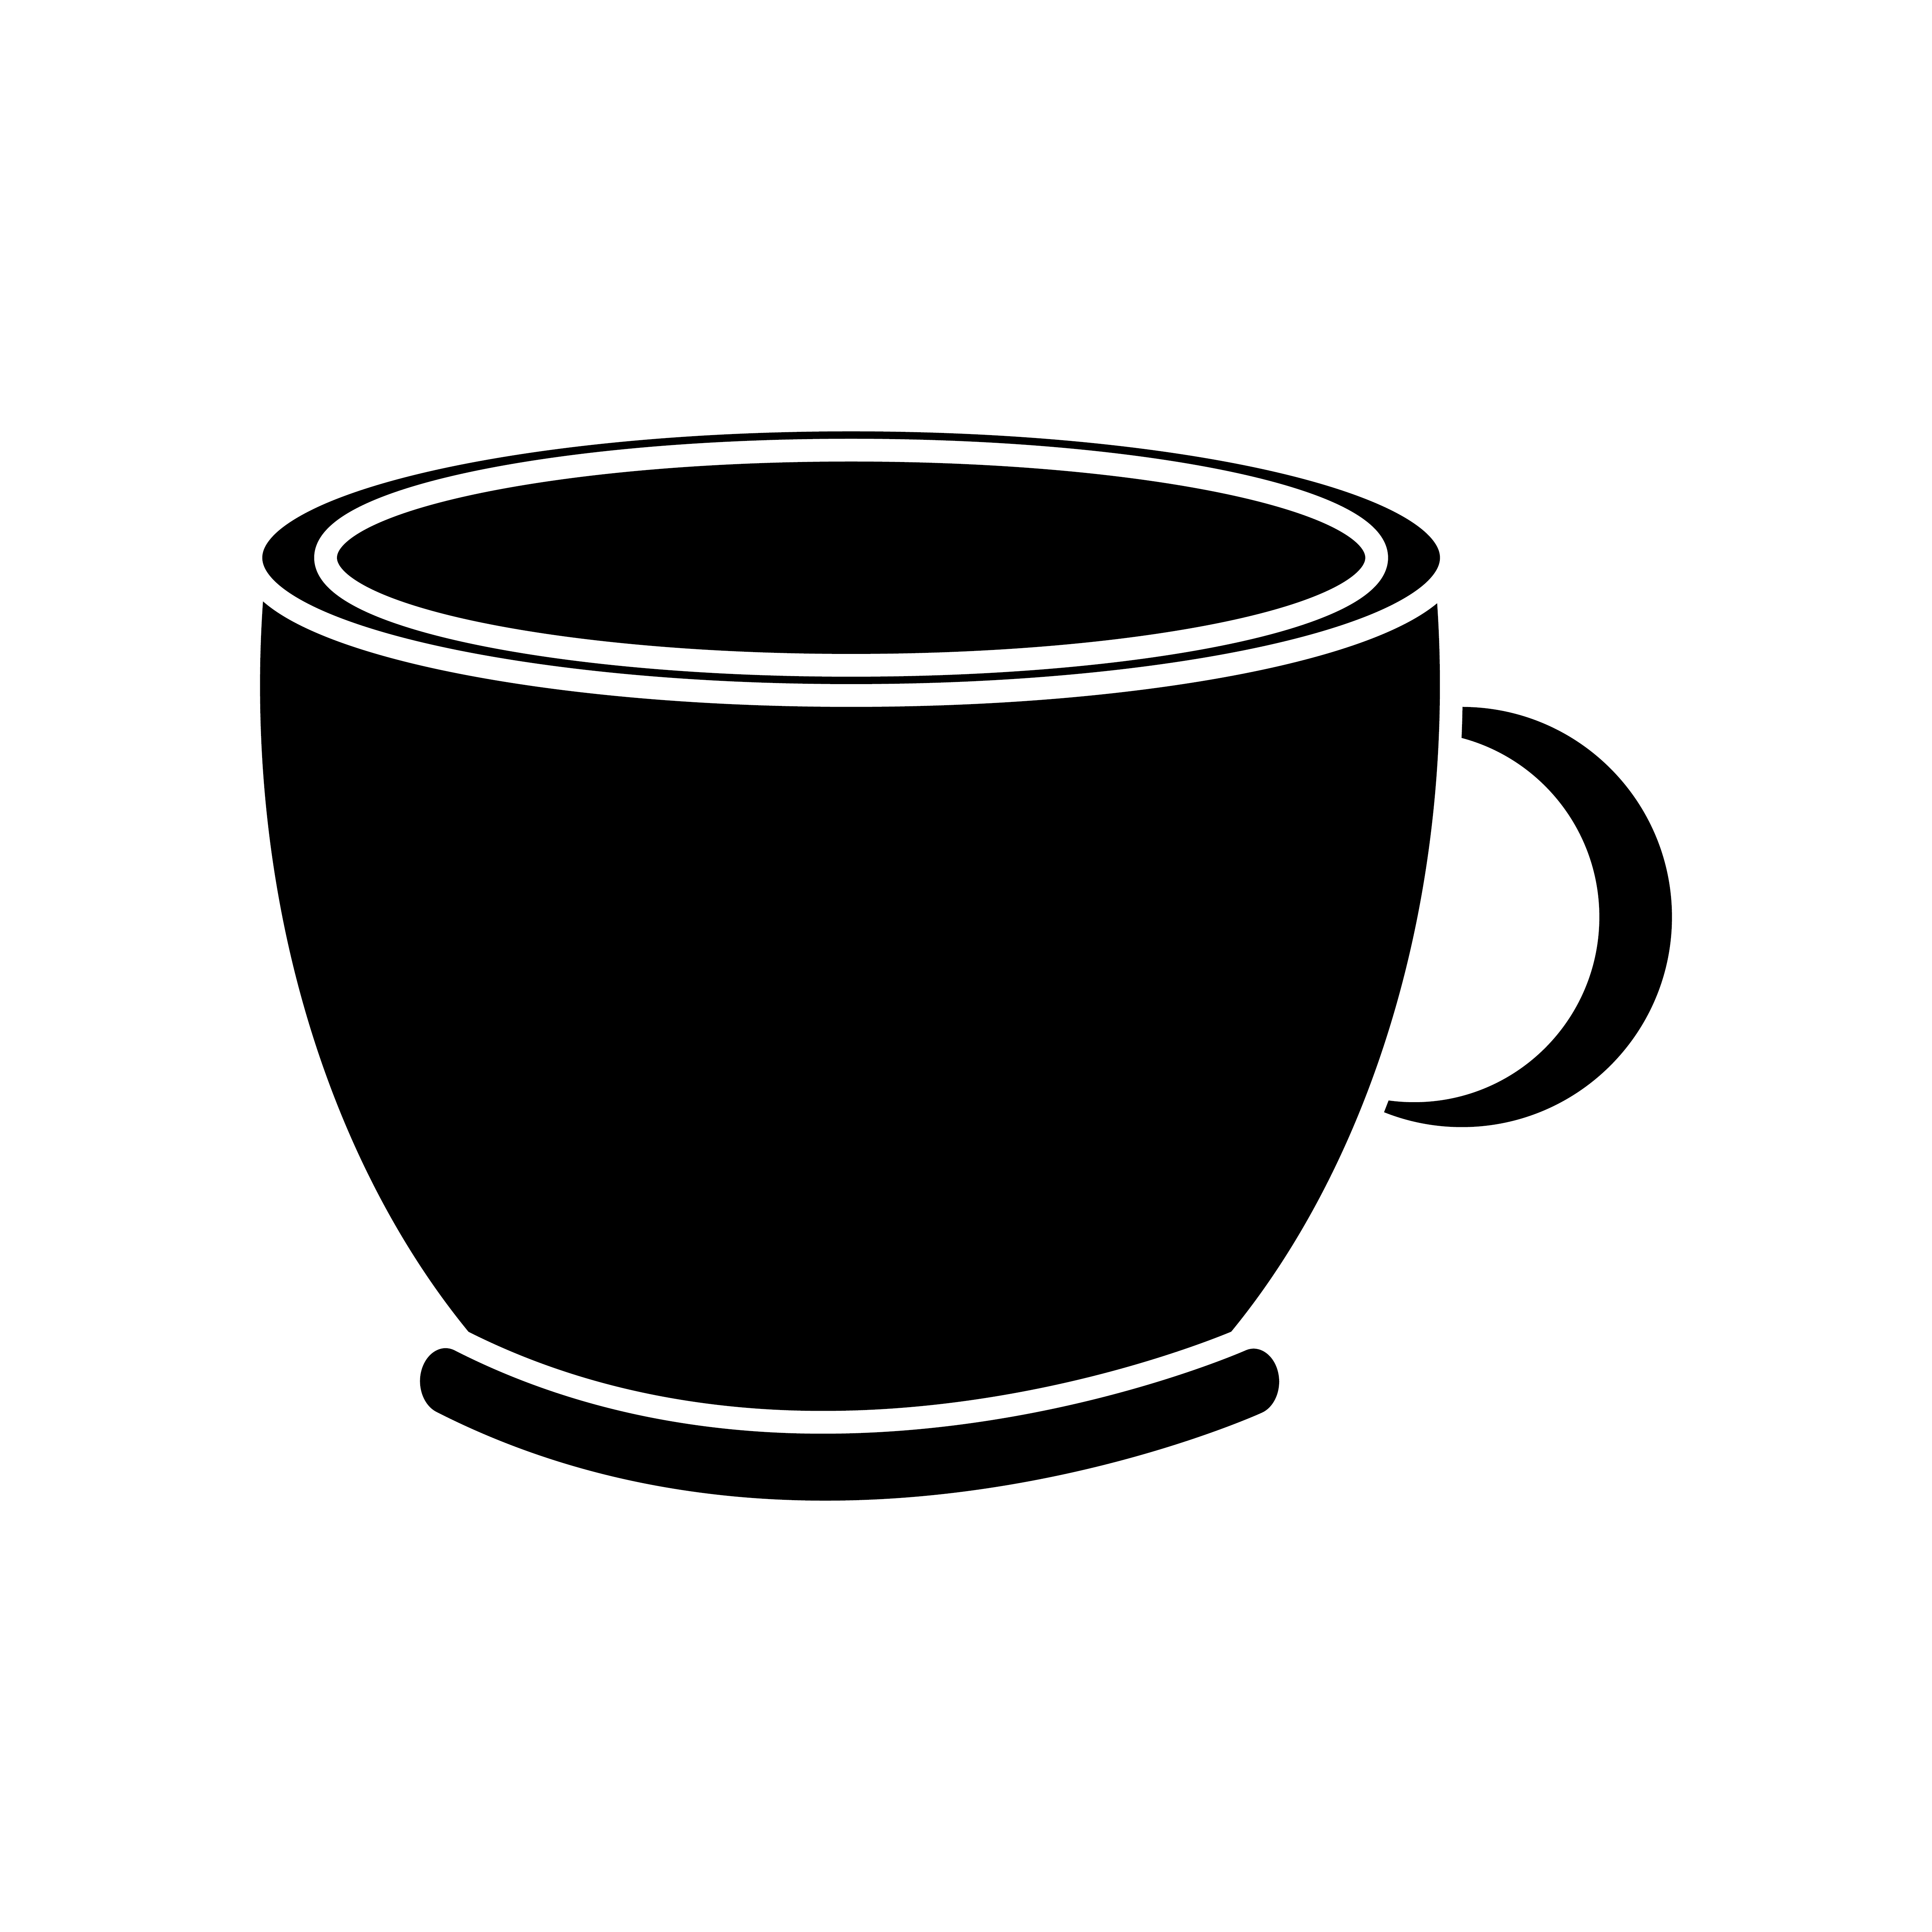 Download coffee mug icon - Download Free Vectors, Clipart Graphics & Vector Art